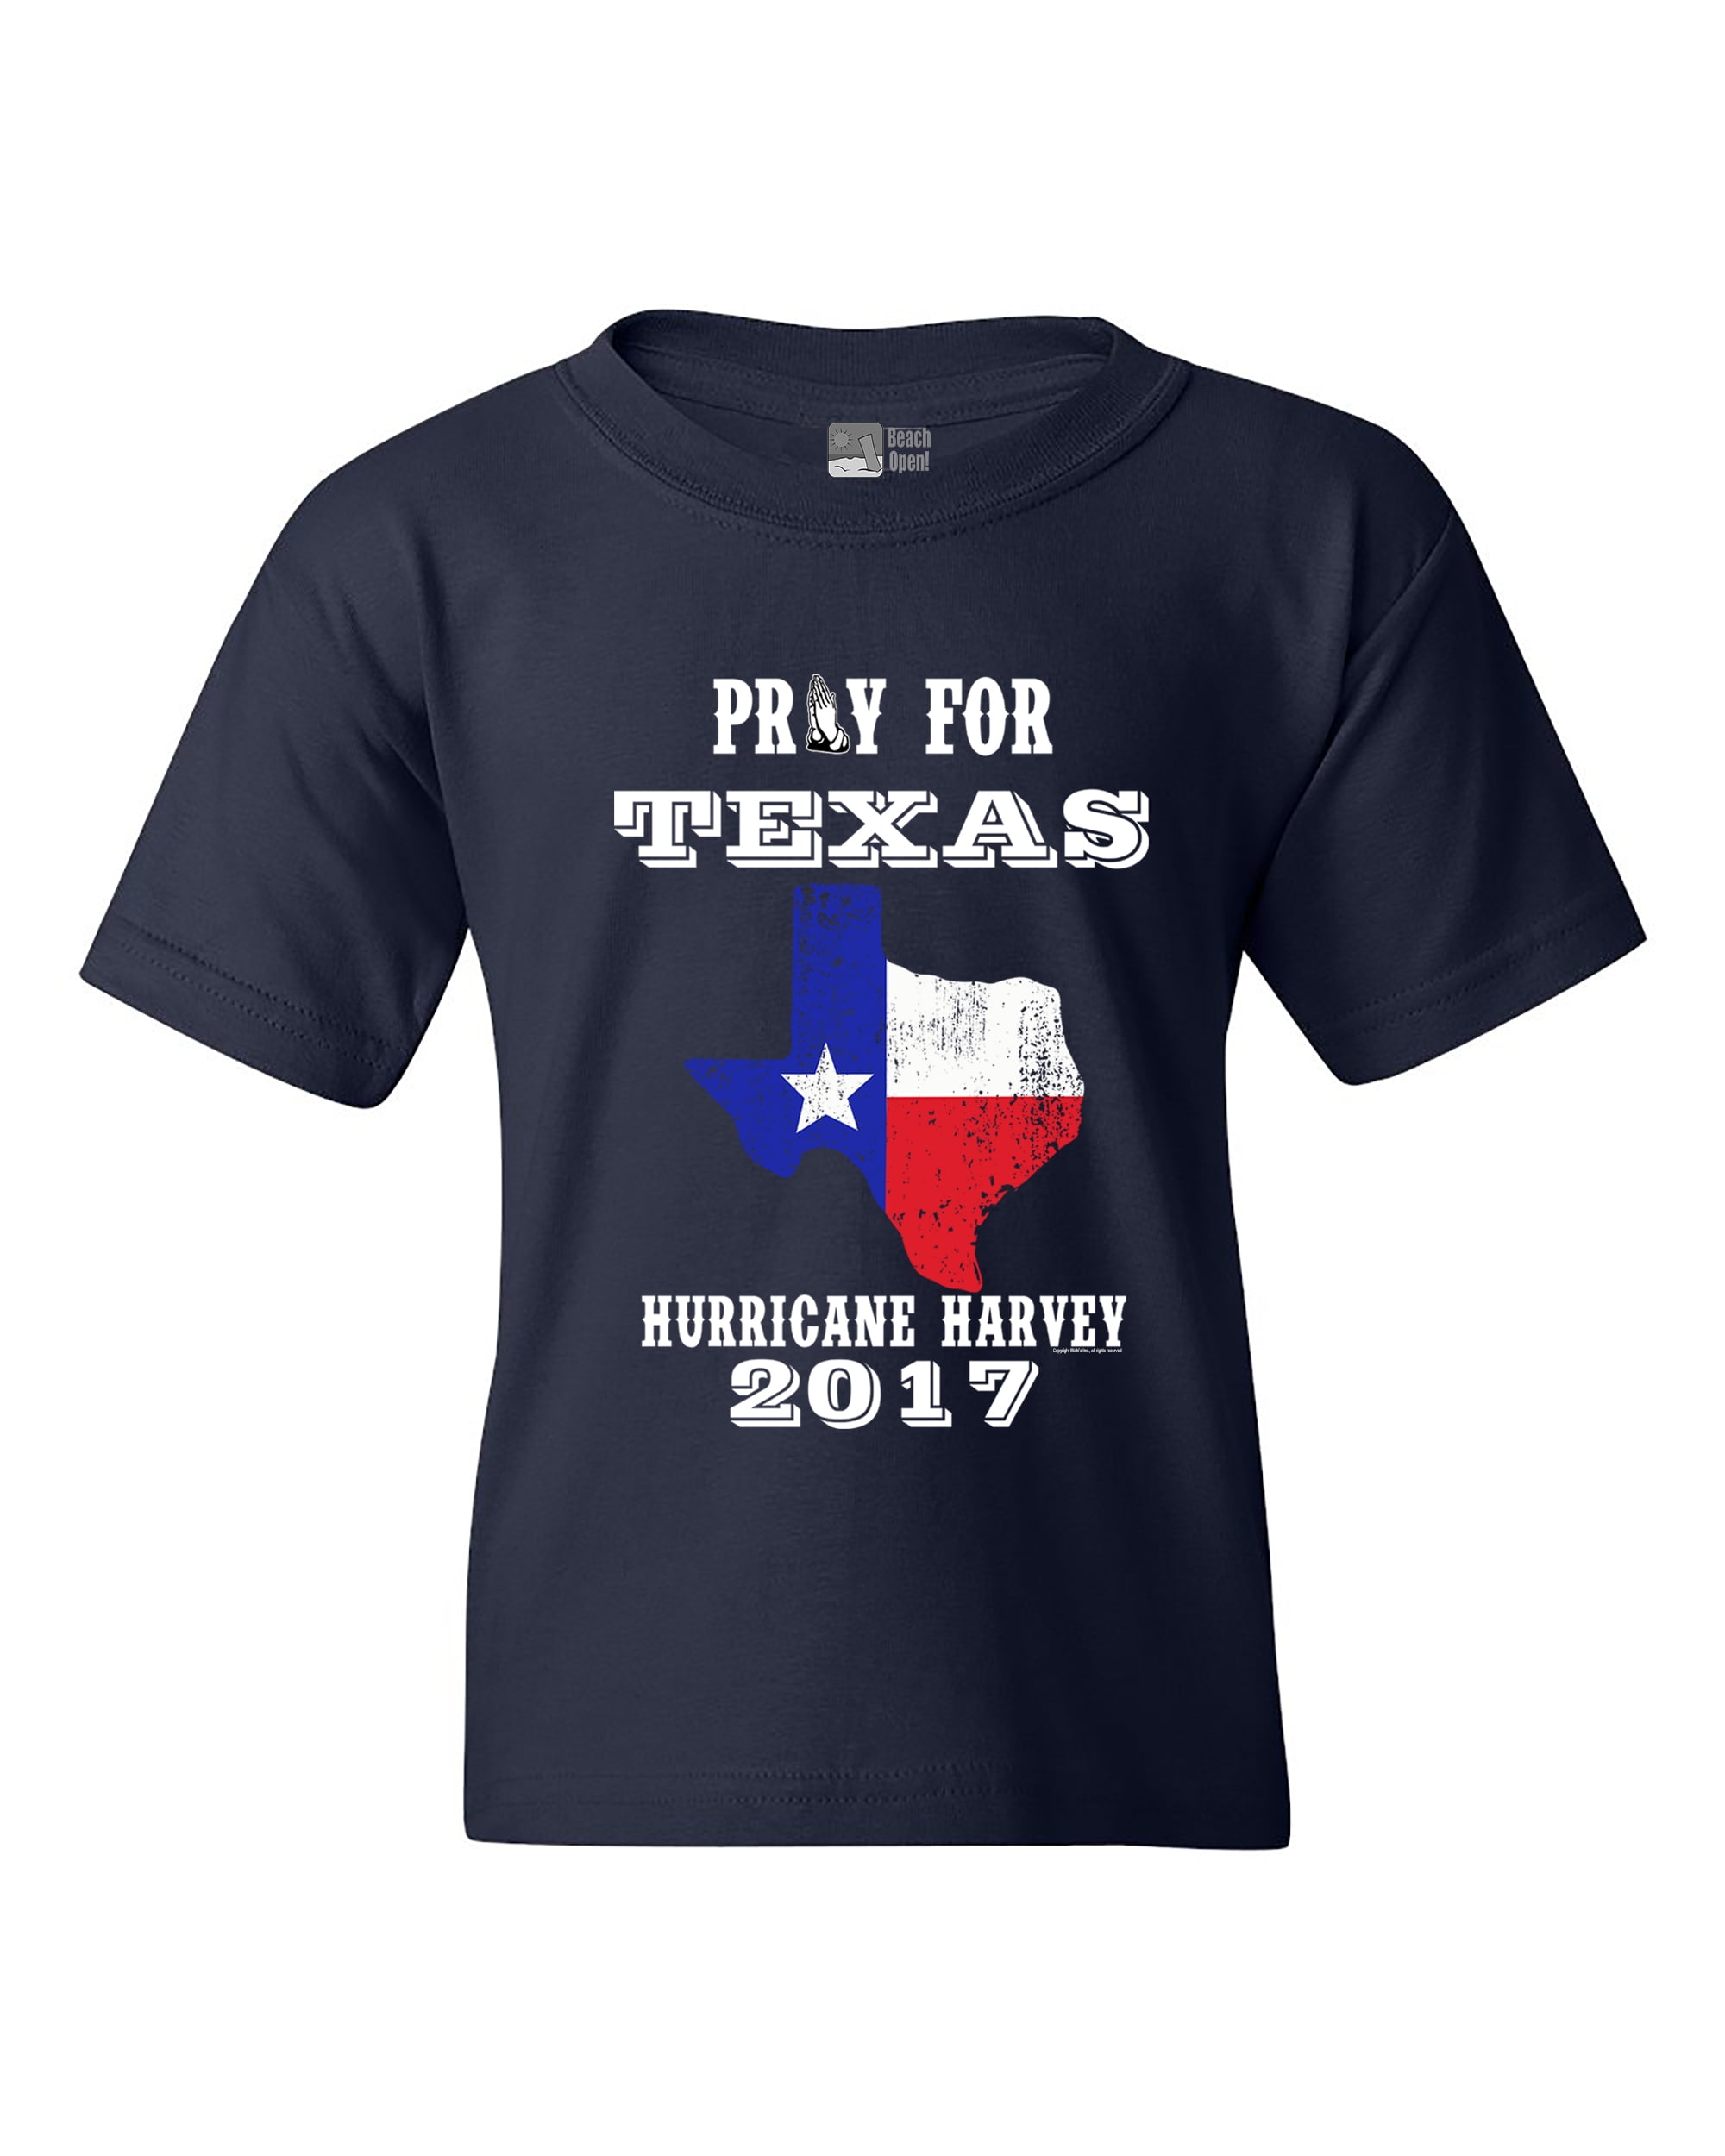 Pray for Texas Map Hurricane Harvey Survivor 2017 DT Youth Kids T-Shirt Tee  